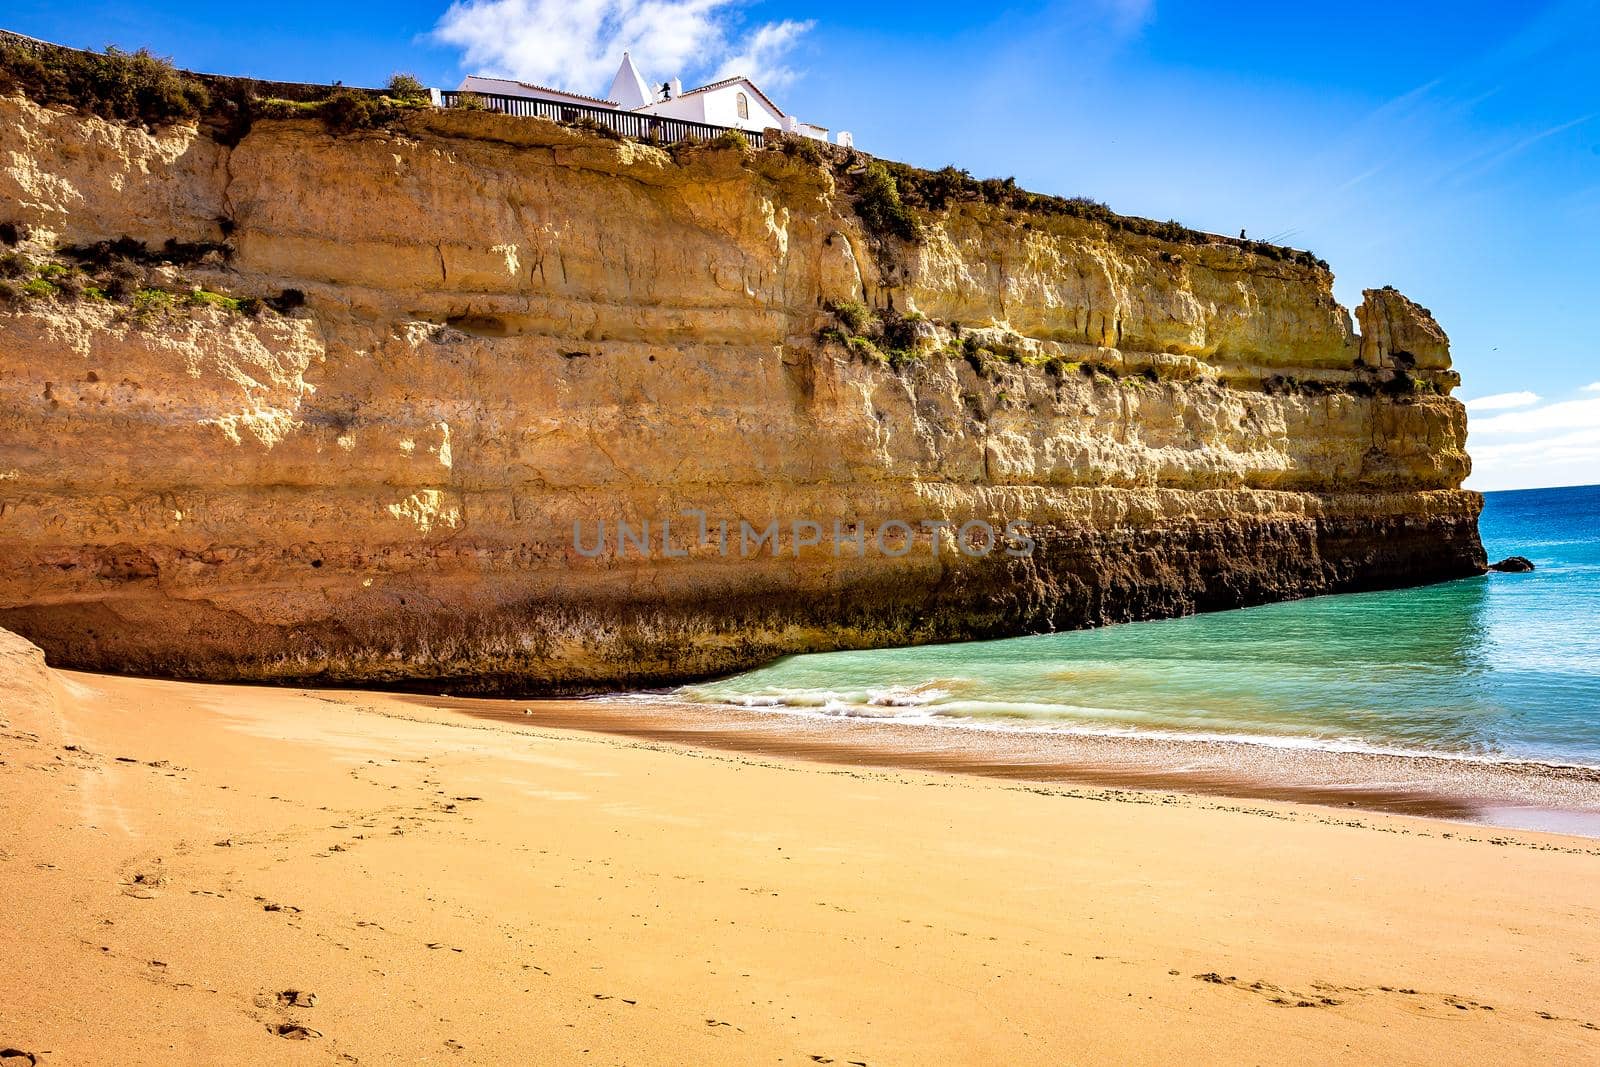 Senhora da rocha beach, Algarve, Portugal by photogolfer